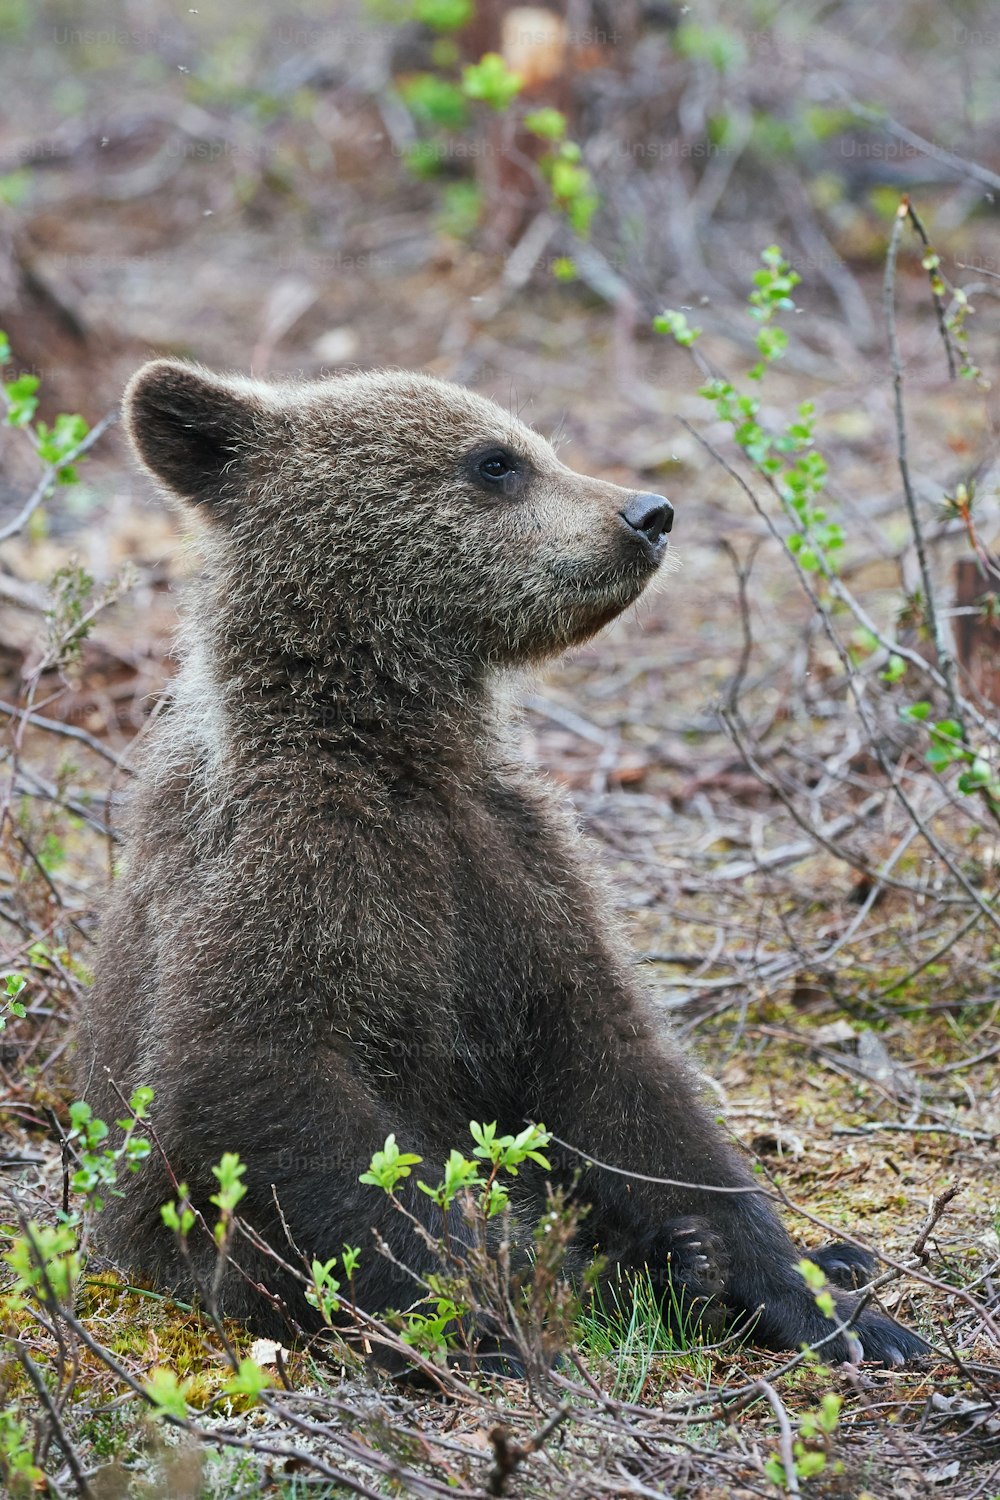 Little bear cub in Finland, sitting among plants